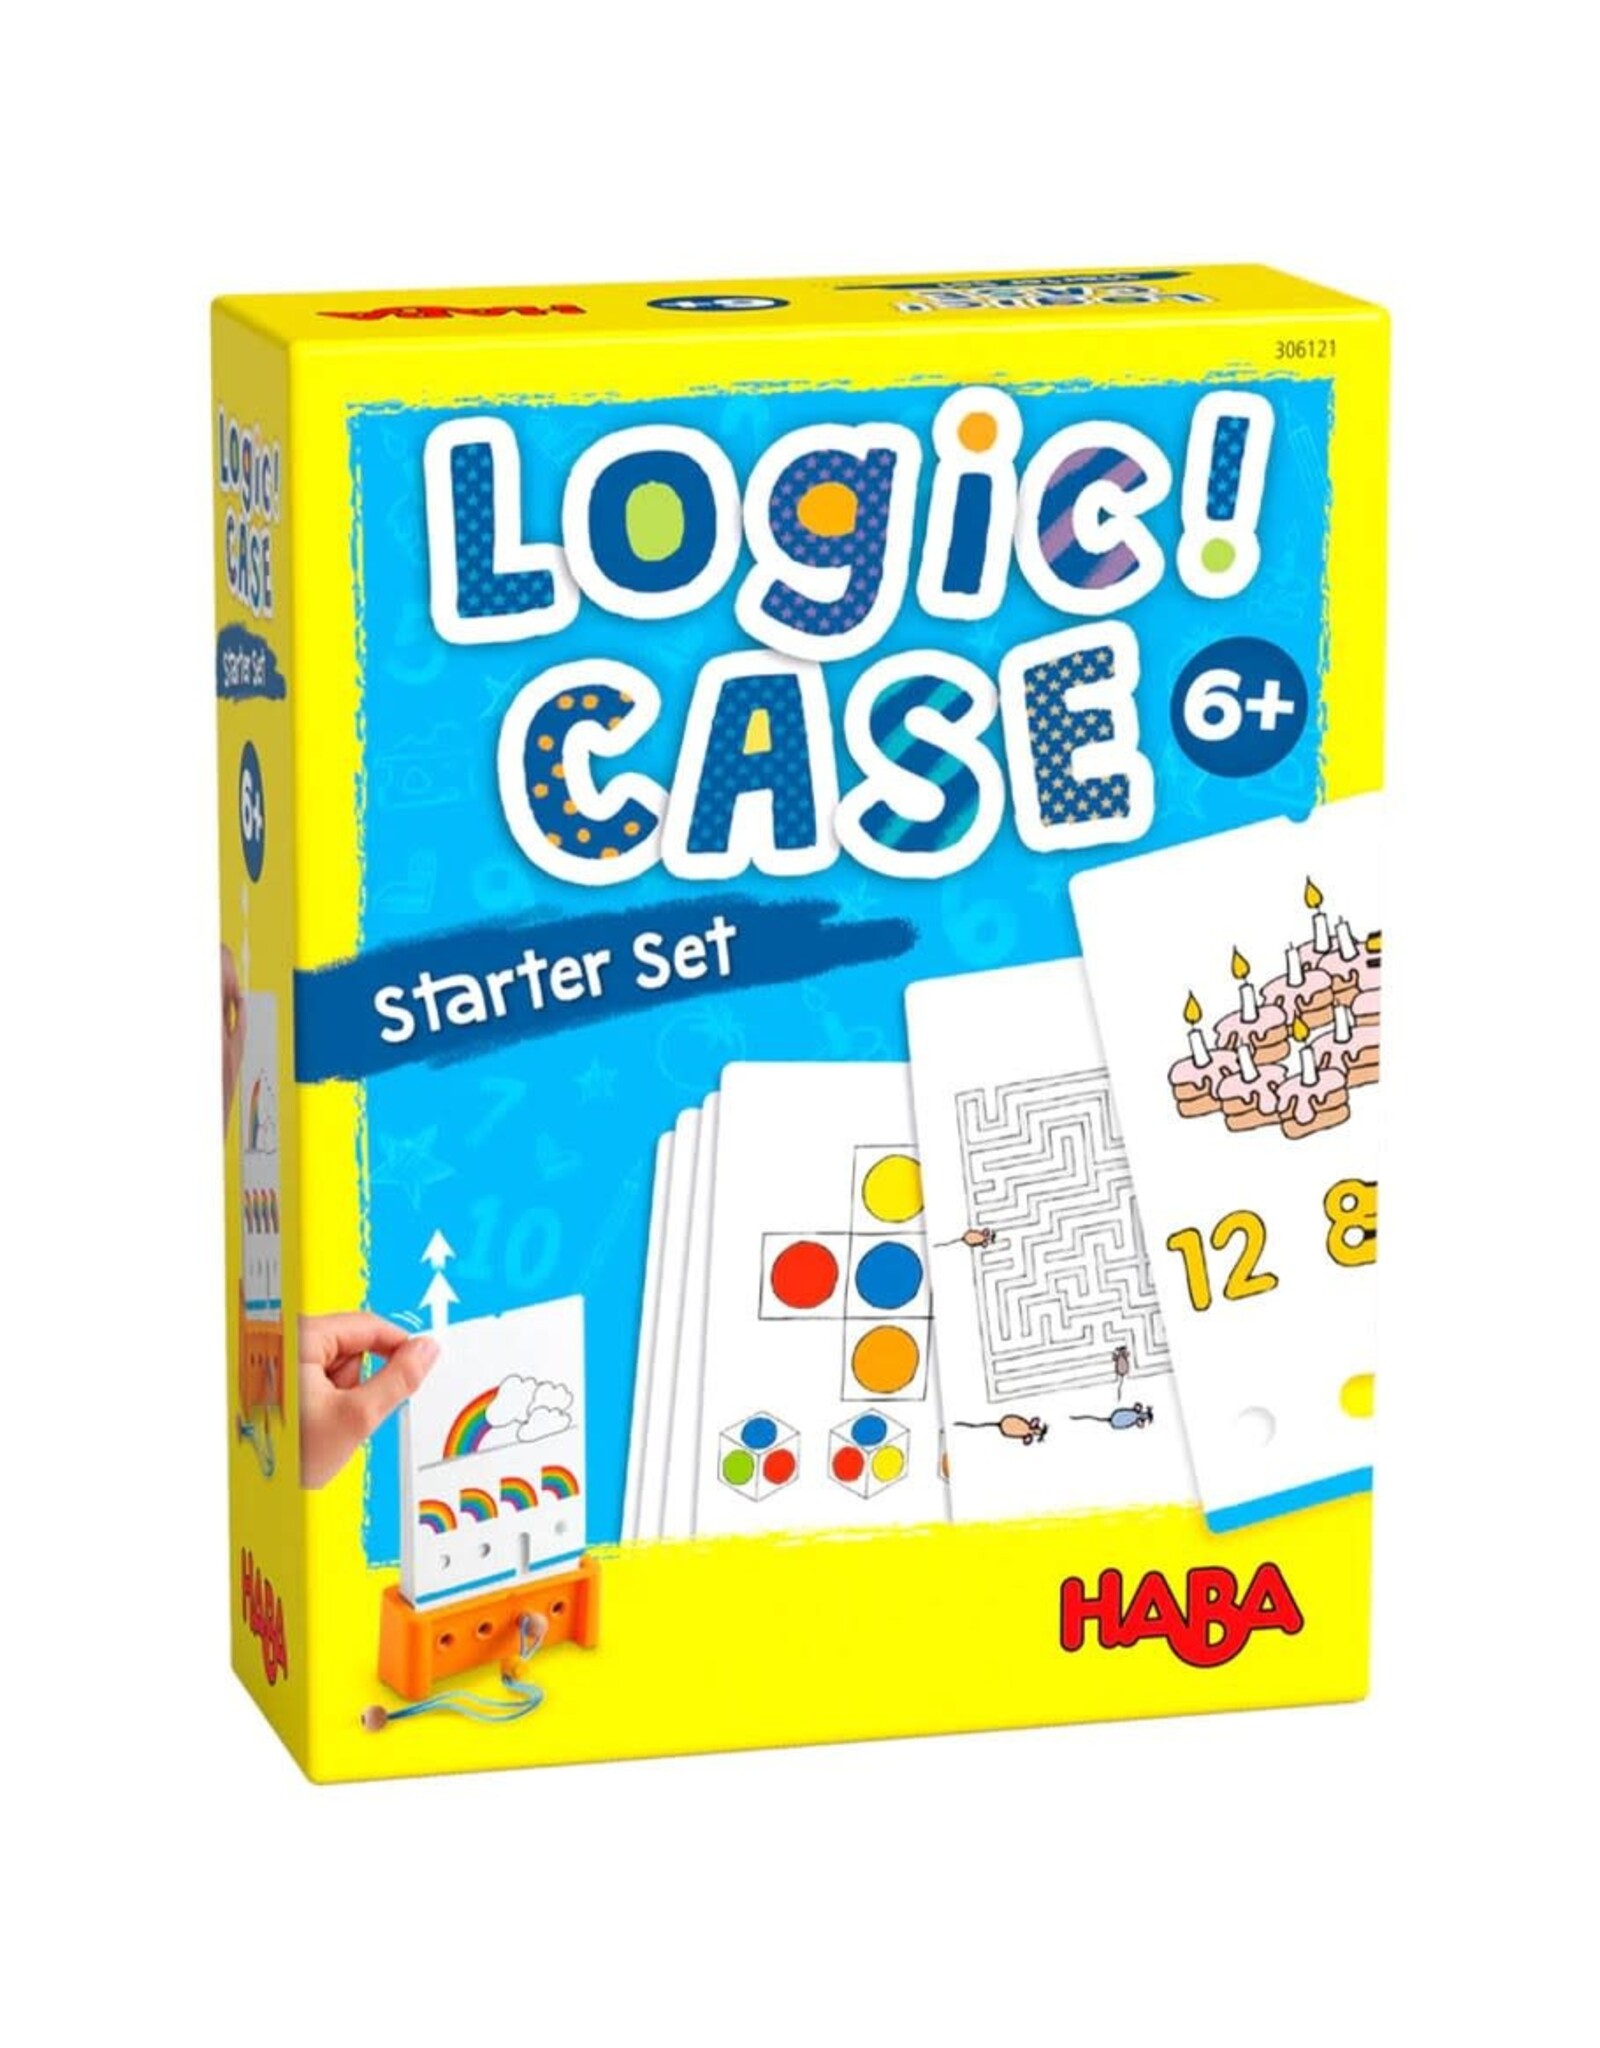 HABA Logic! CASE: Starter Set 6+